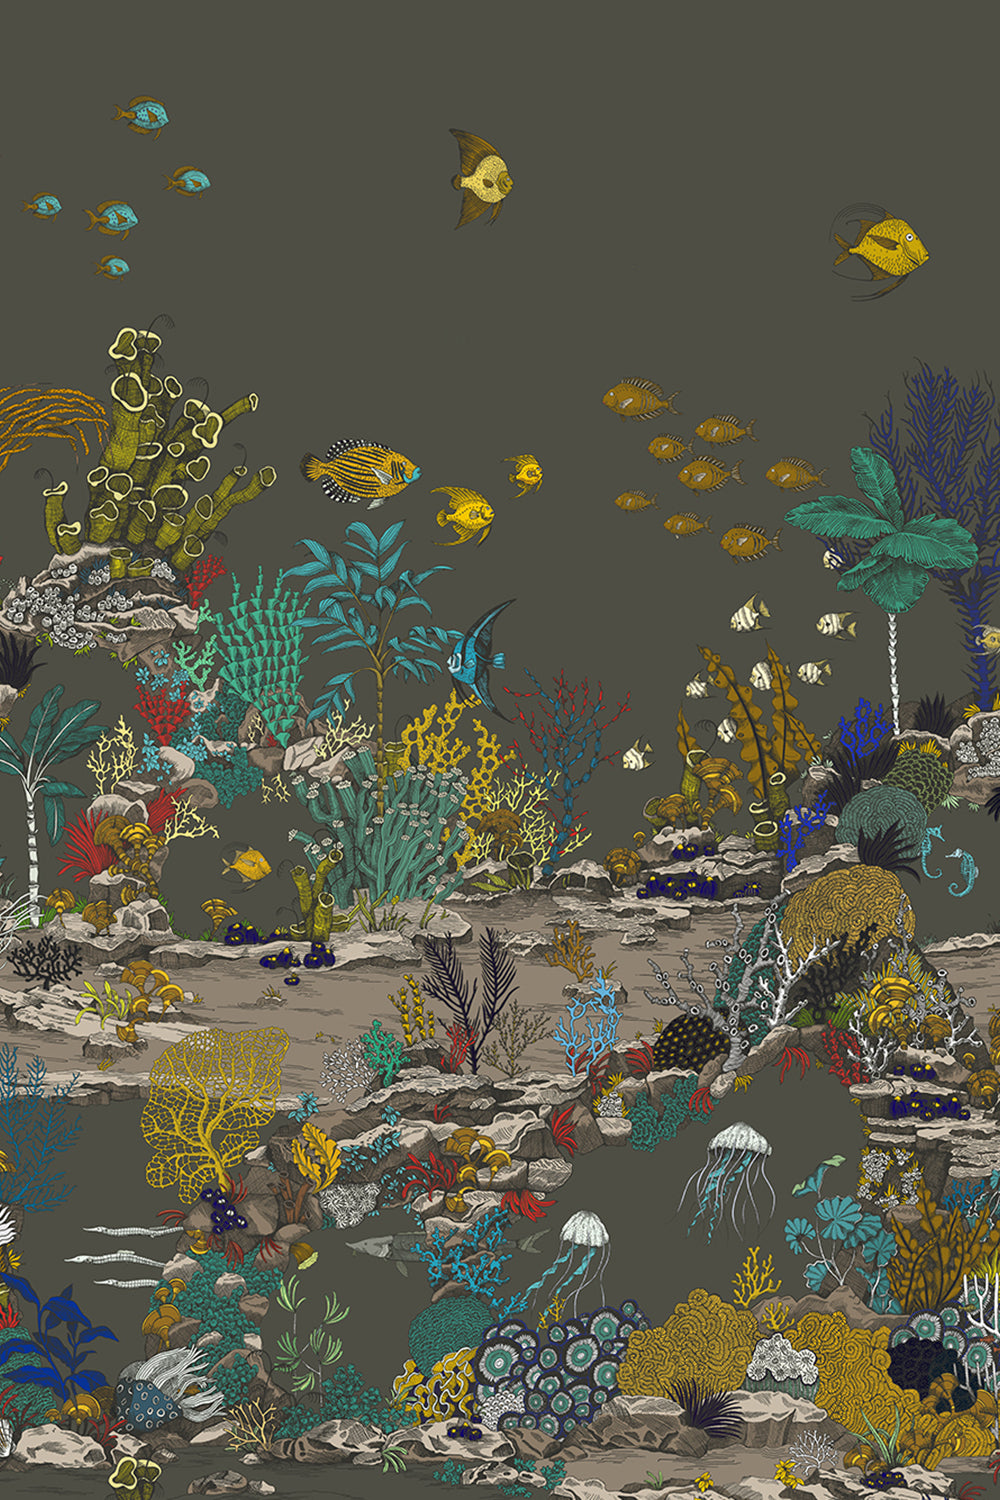 jospehine-munsey-underwater-jungle-wallpaper-tropical-sea-textile-print-anthracite-grey